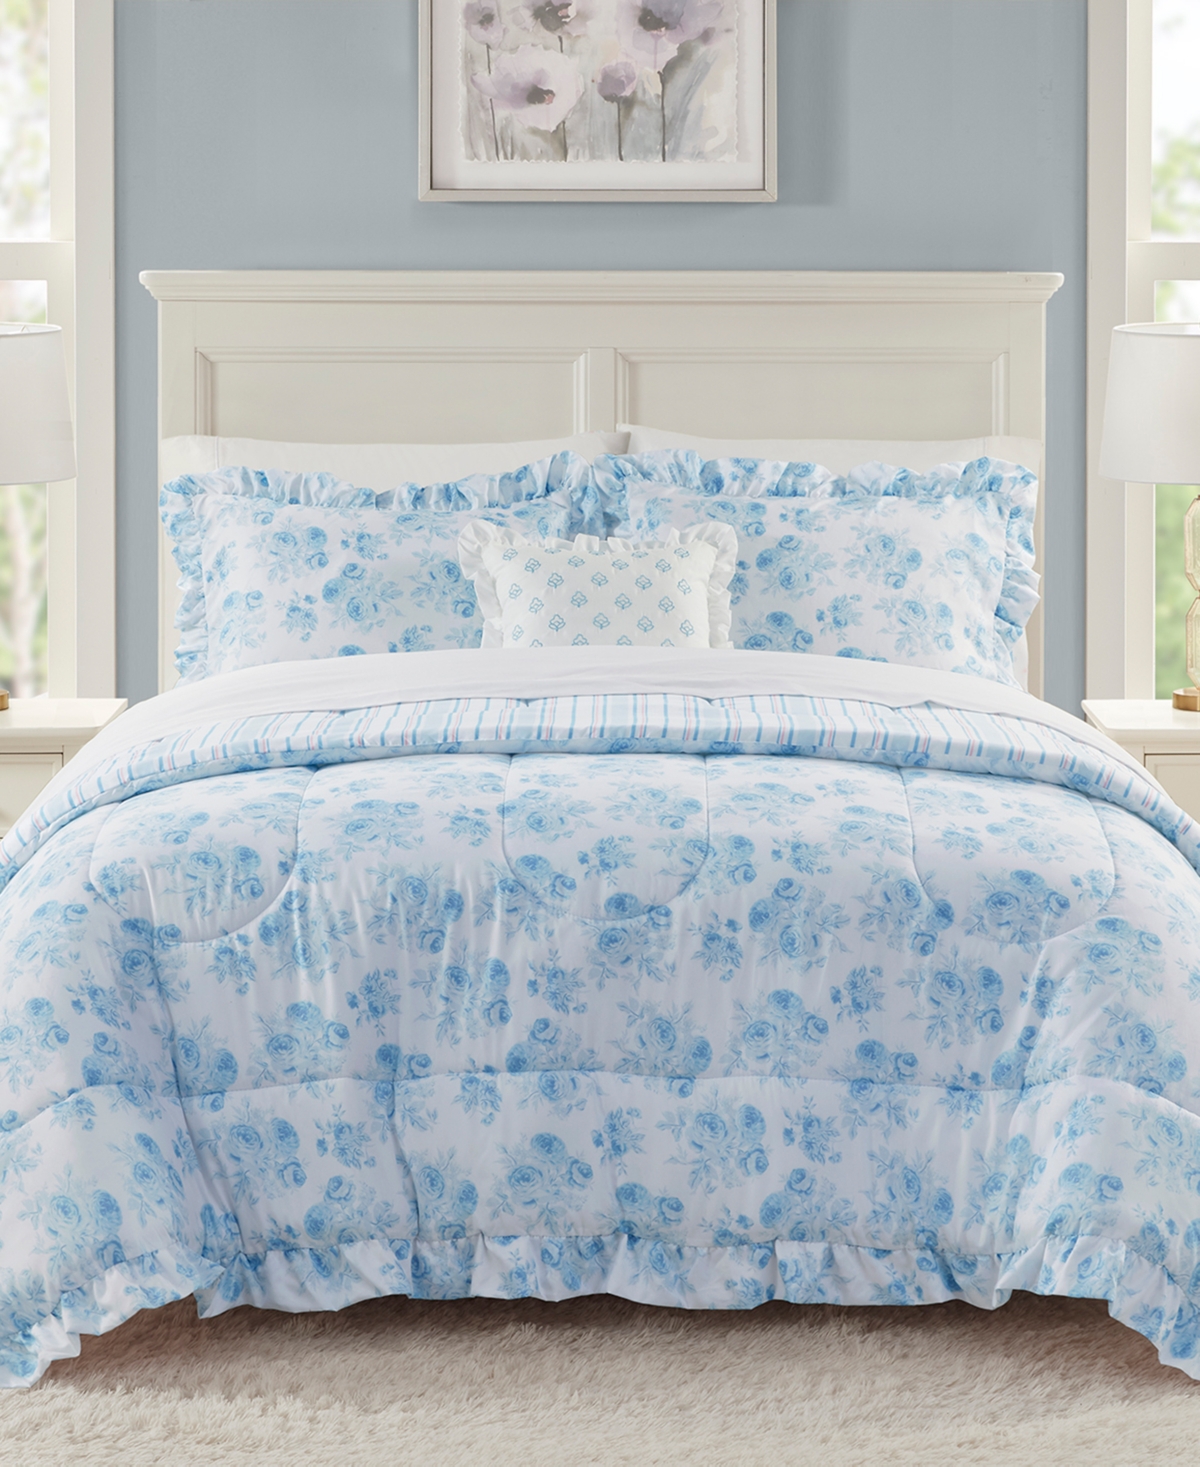 Jla Home Mia Ruffled Reversible 4 Pc. Comforter Set Created For Macys In Blue